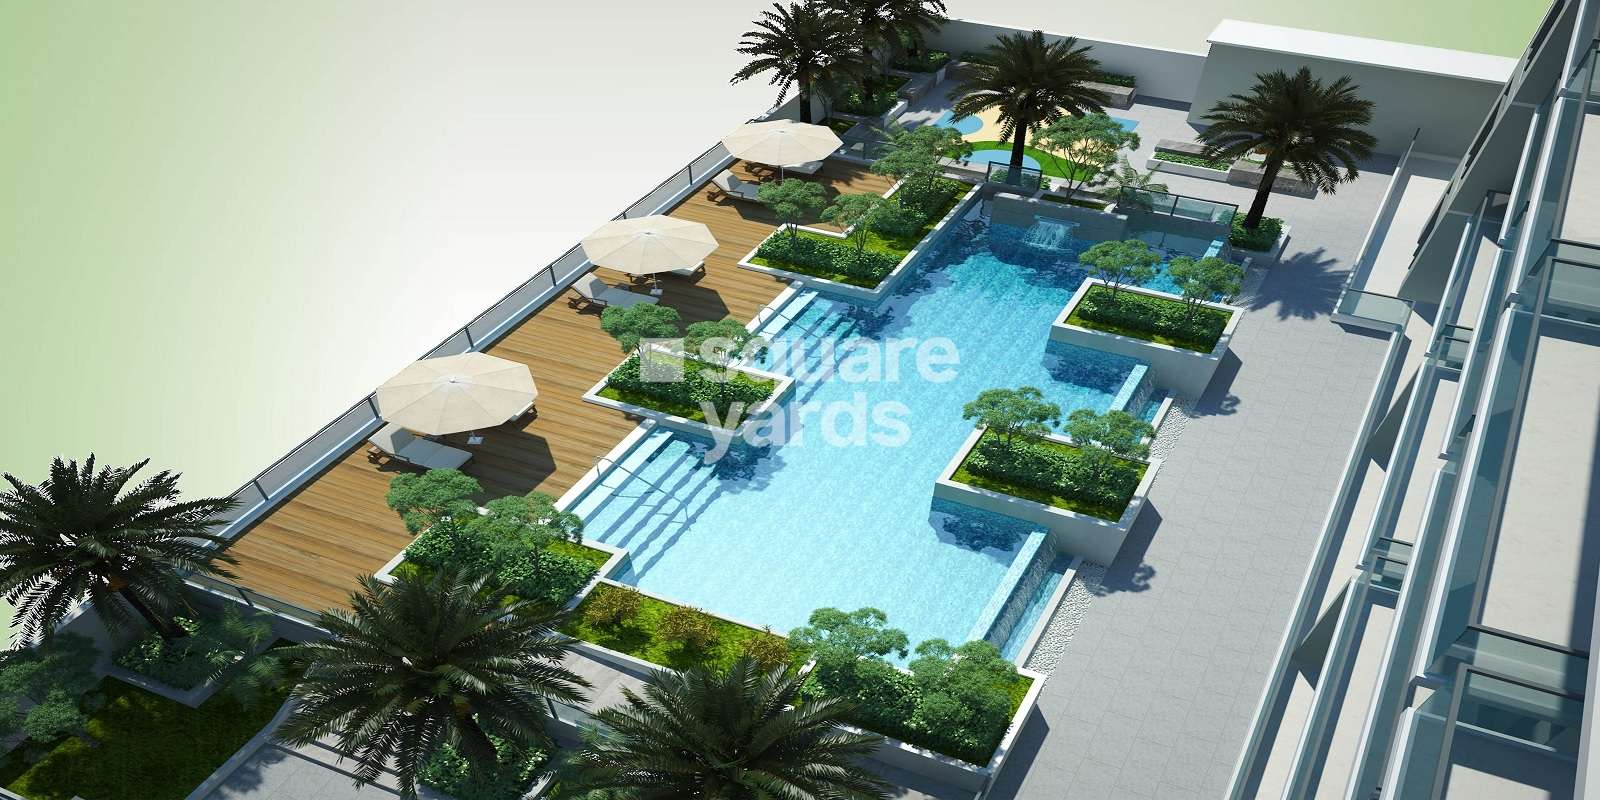 dar al jawhara project amenities features5